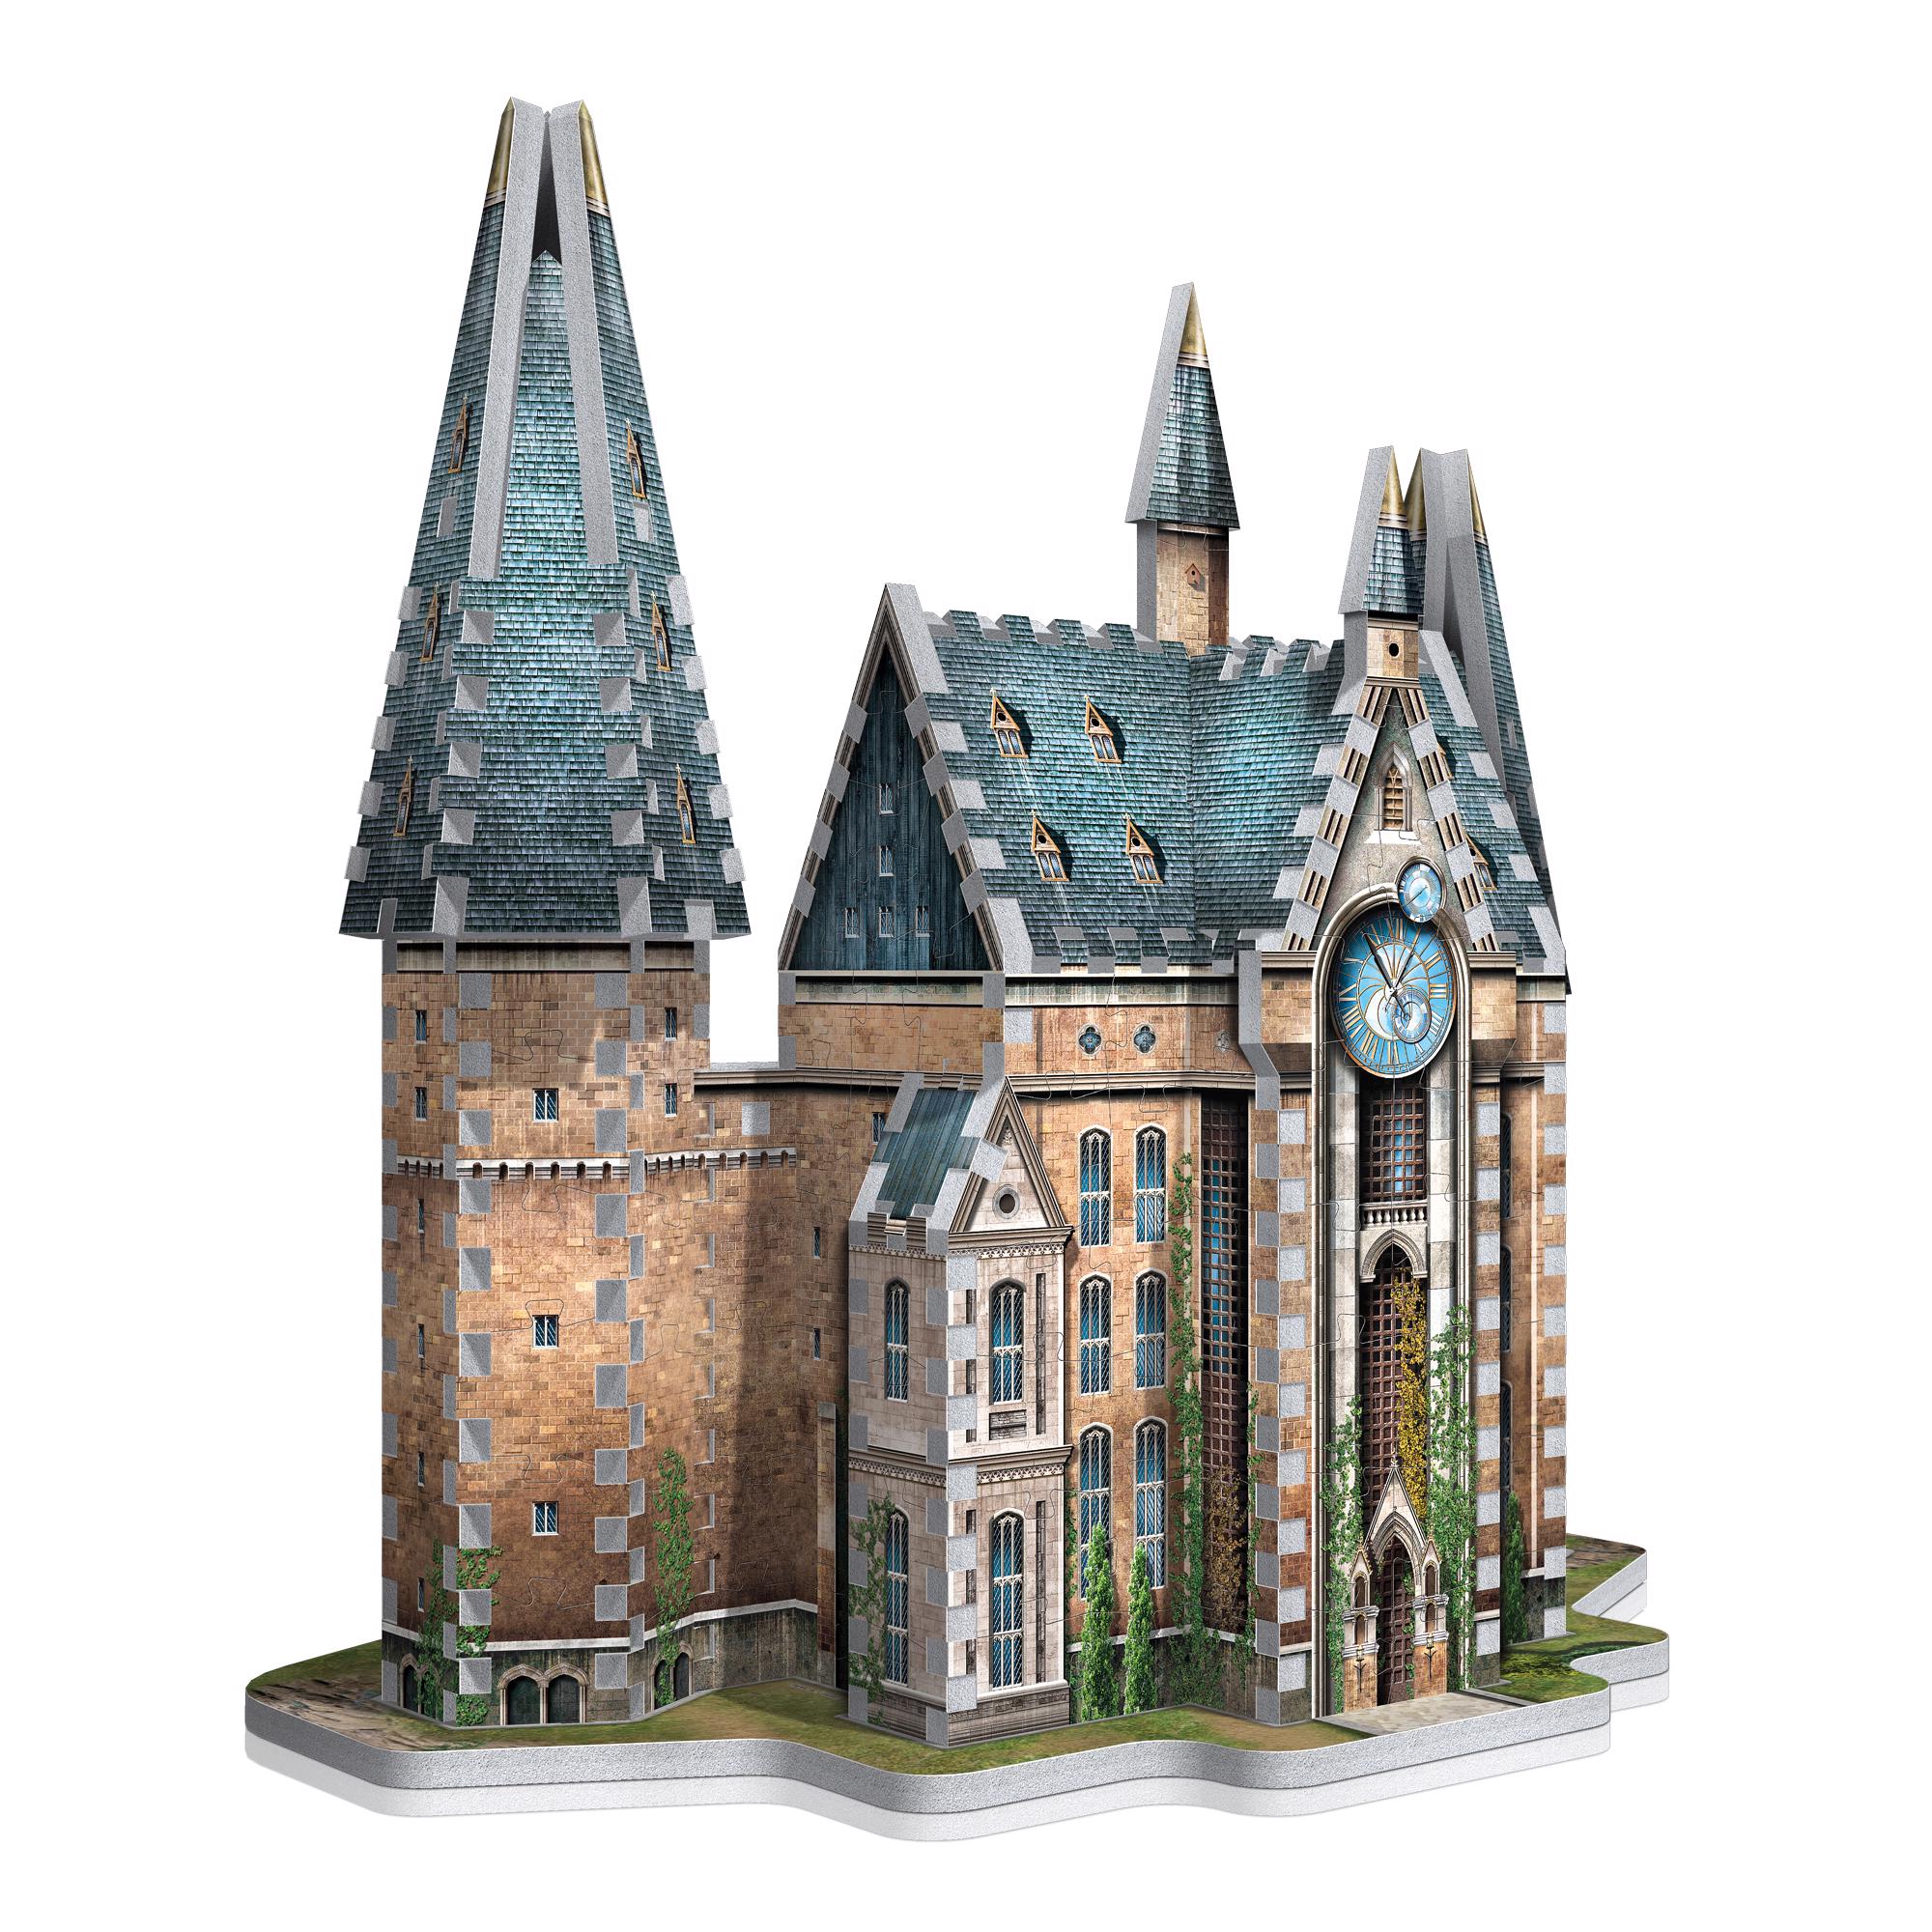 Puzzle Harry Potter: A Torre do Relógio image 2